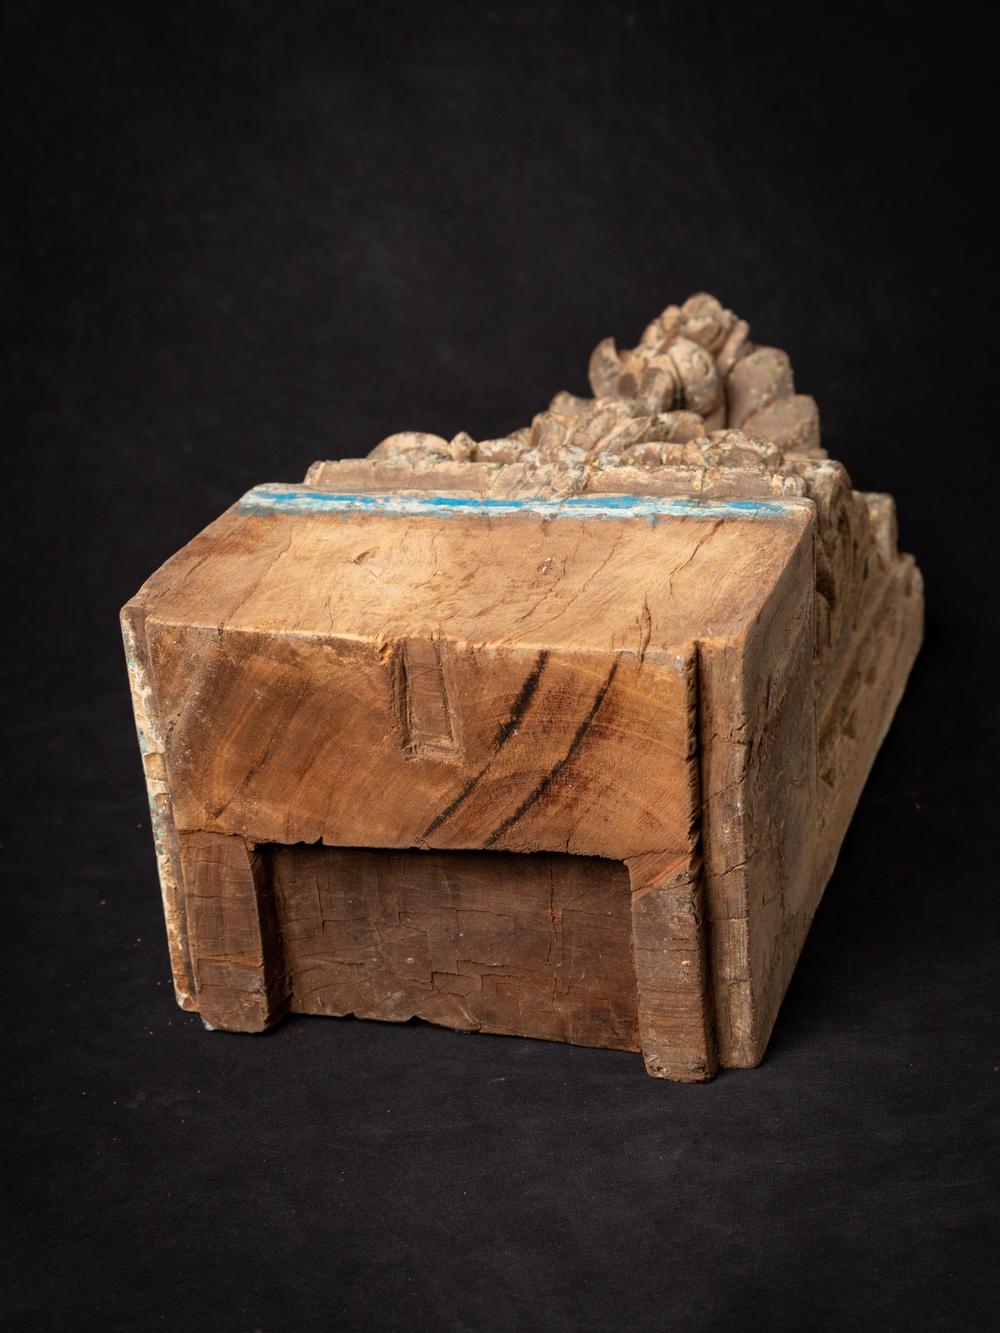 18th century Antique Indian wooden temple fragment from India - OriginalBuddhas 15